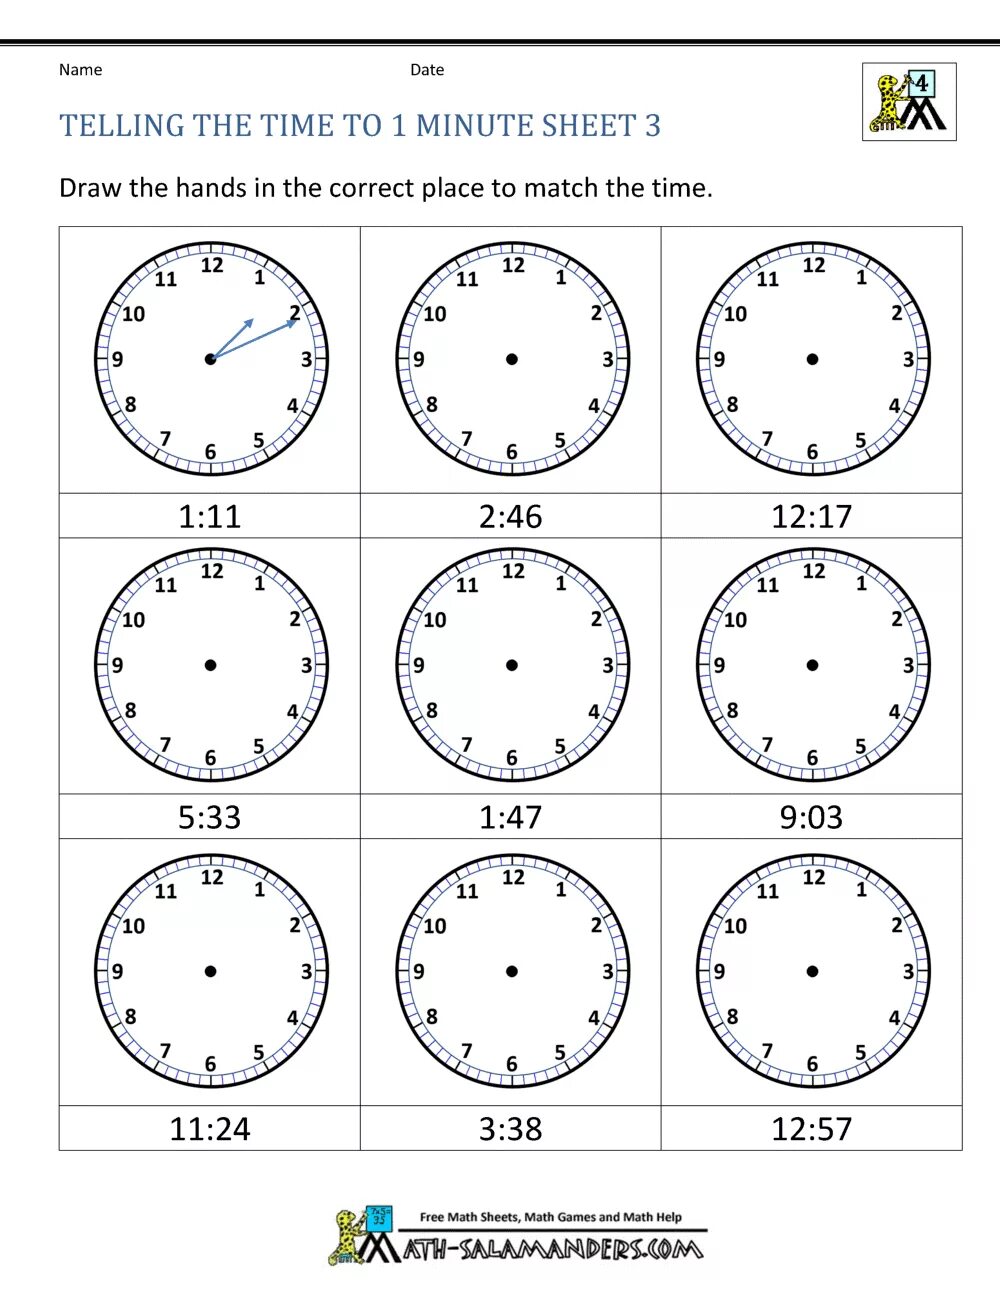 Telling the time worksheet. Telling the time задания. Часы Worksheets. Часы задания для дошкольников. Английский циферблат для изучения времени.